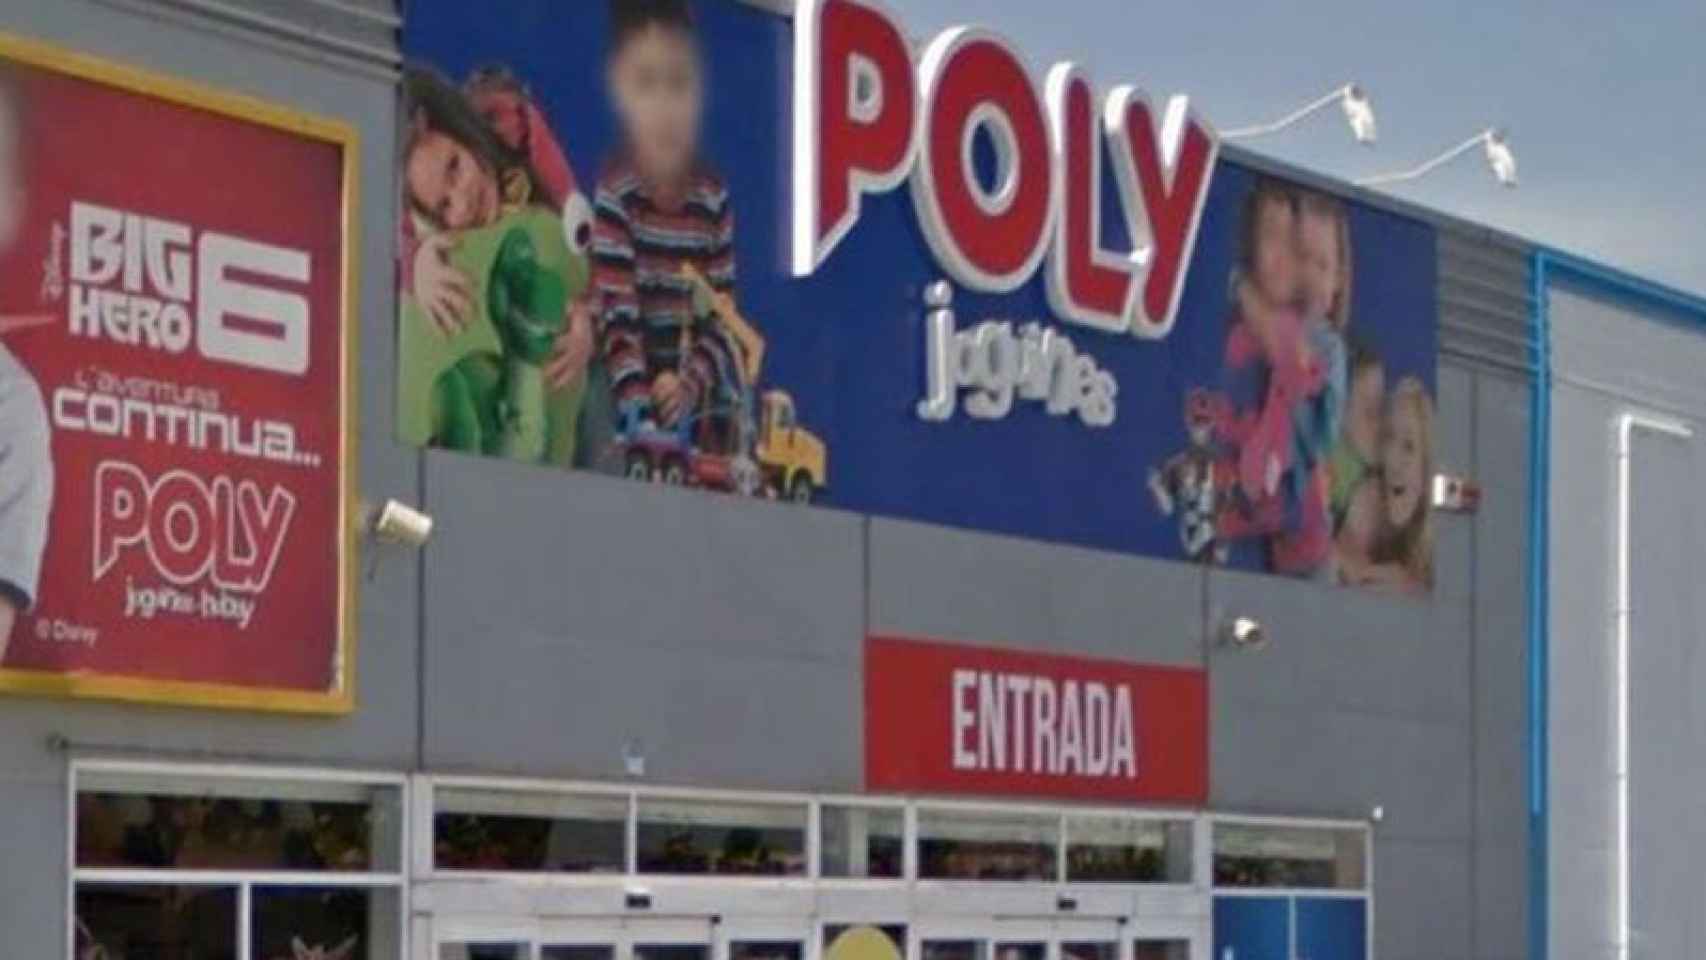 Tienda de juguetes Poly situada en Figueres (Girona)